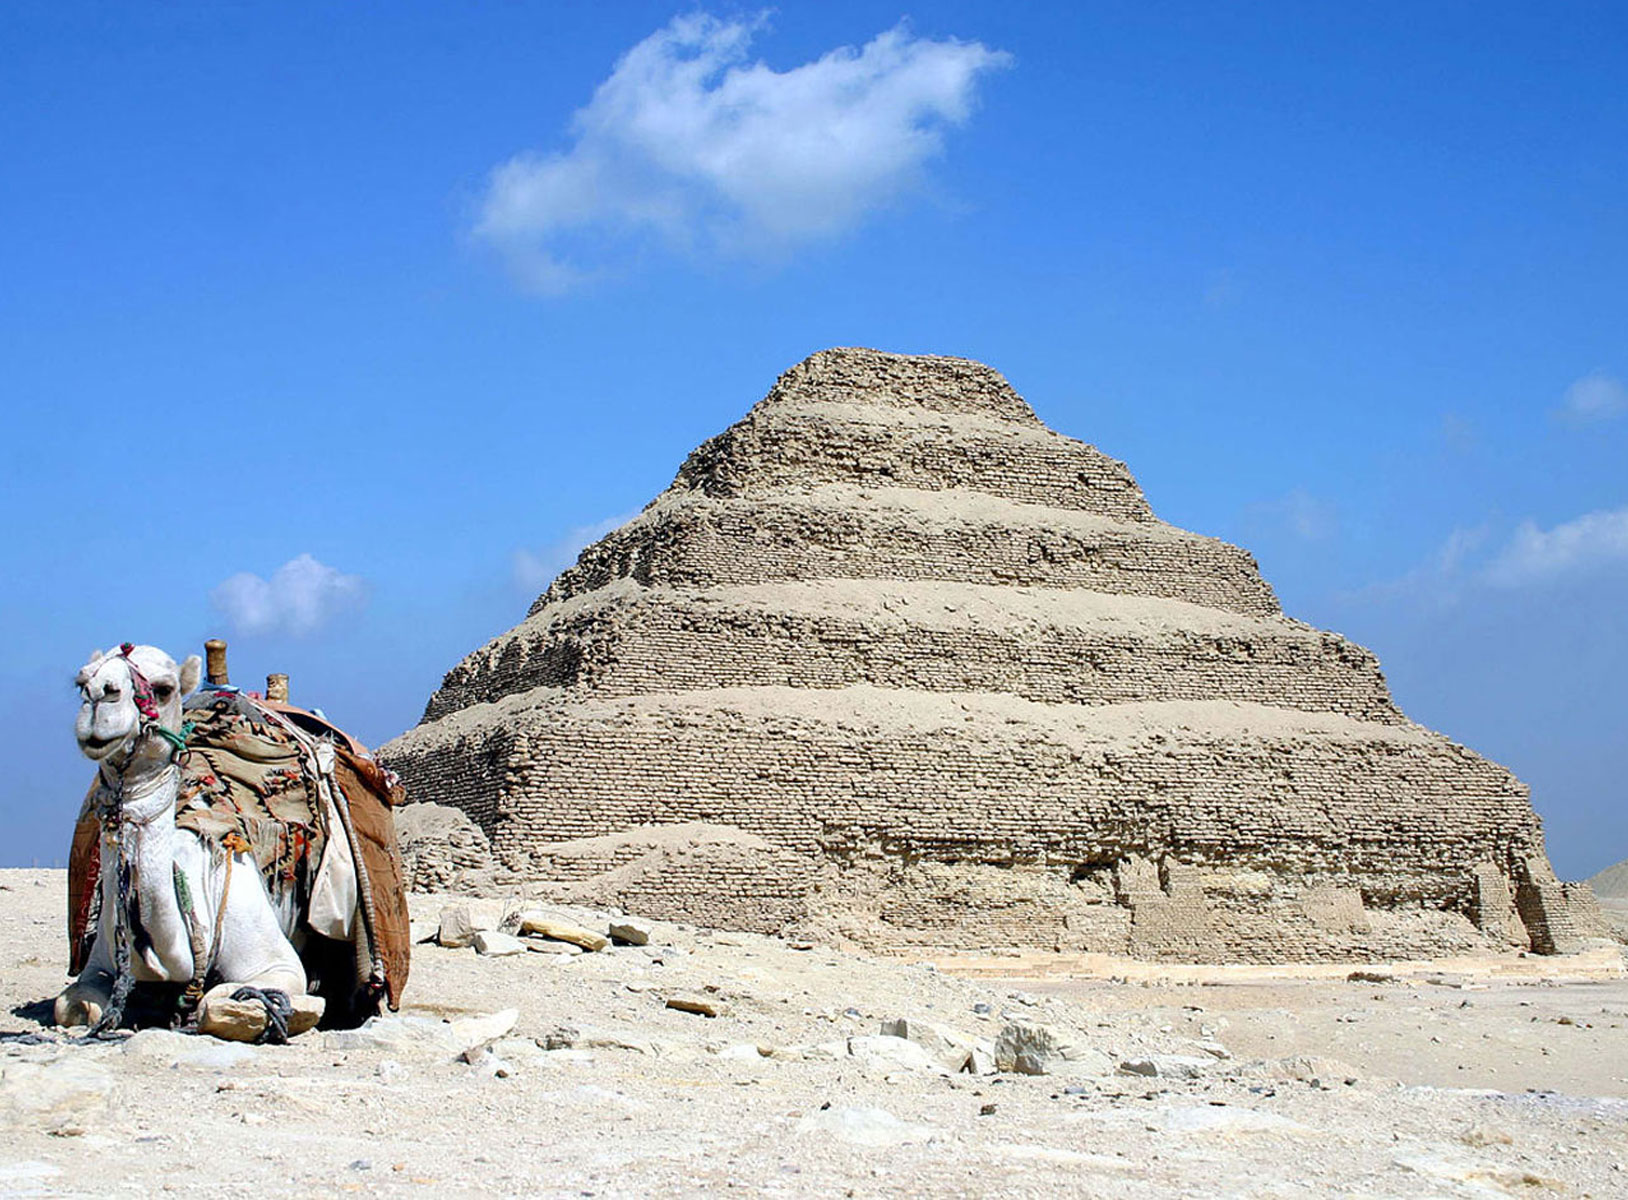 Camel sat next to pyramid